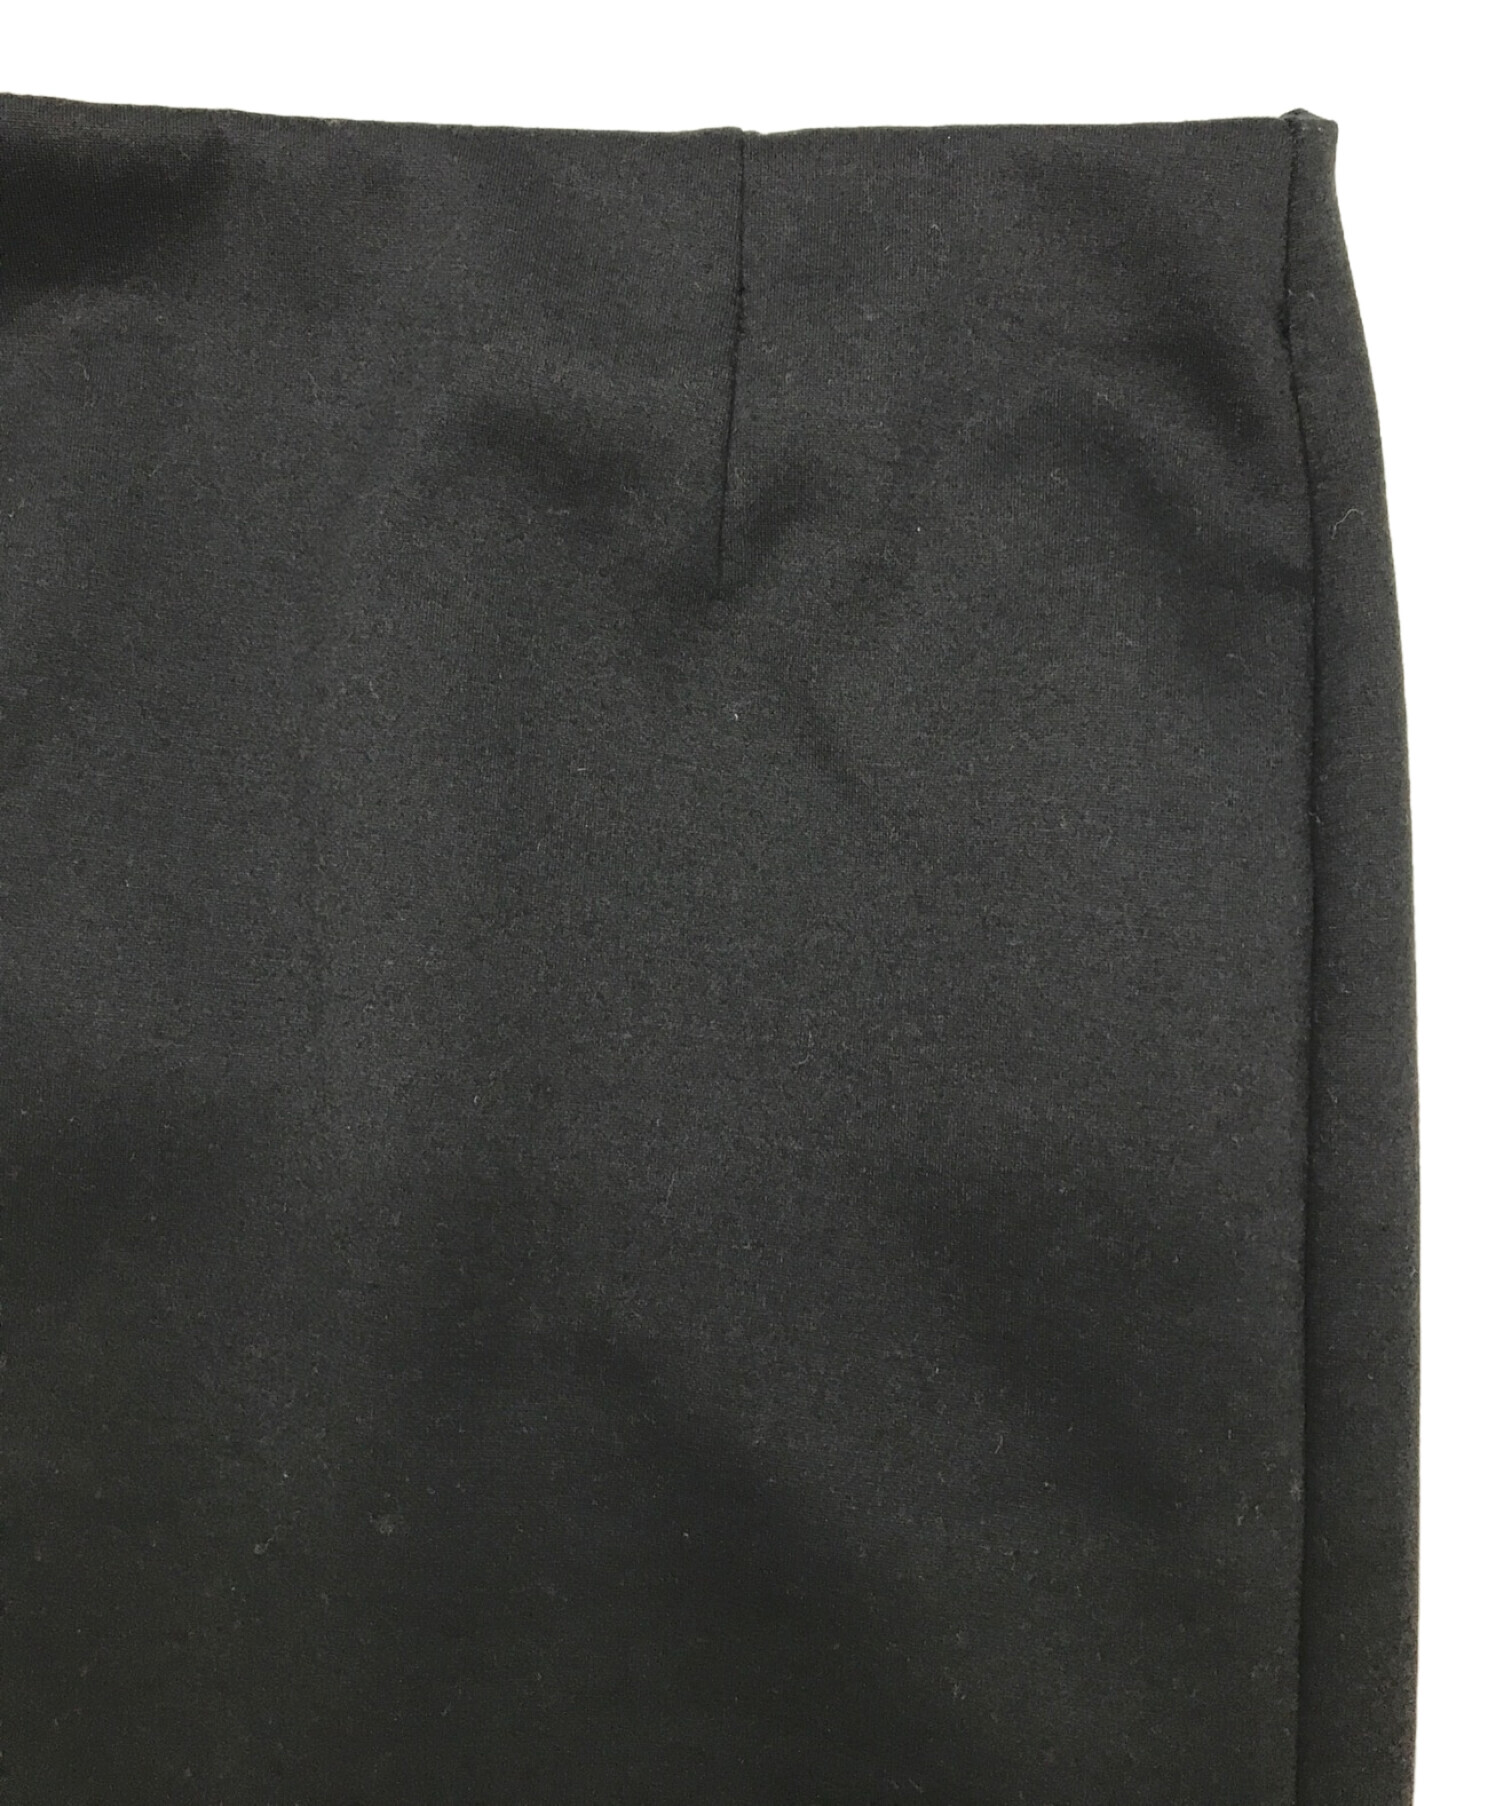 FRAMeWORK (フレームワーク) ダンボールニット タイトスカート ブラック サイズ:38